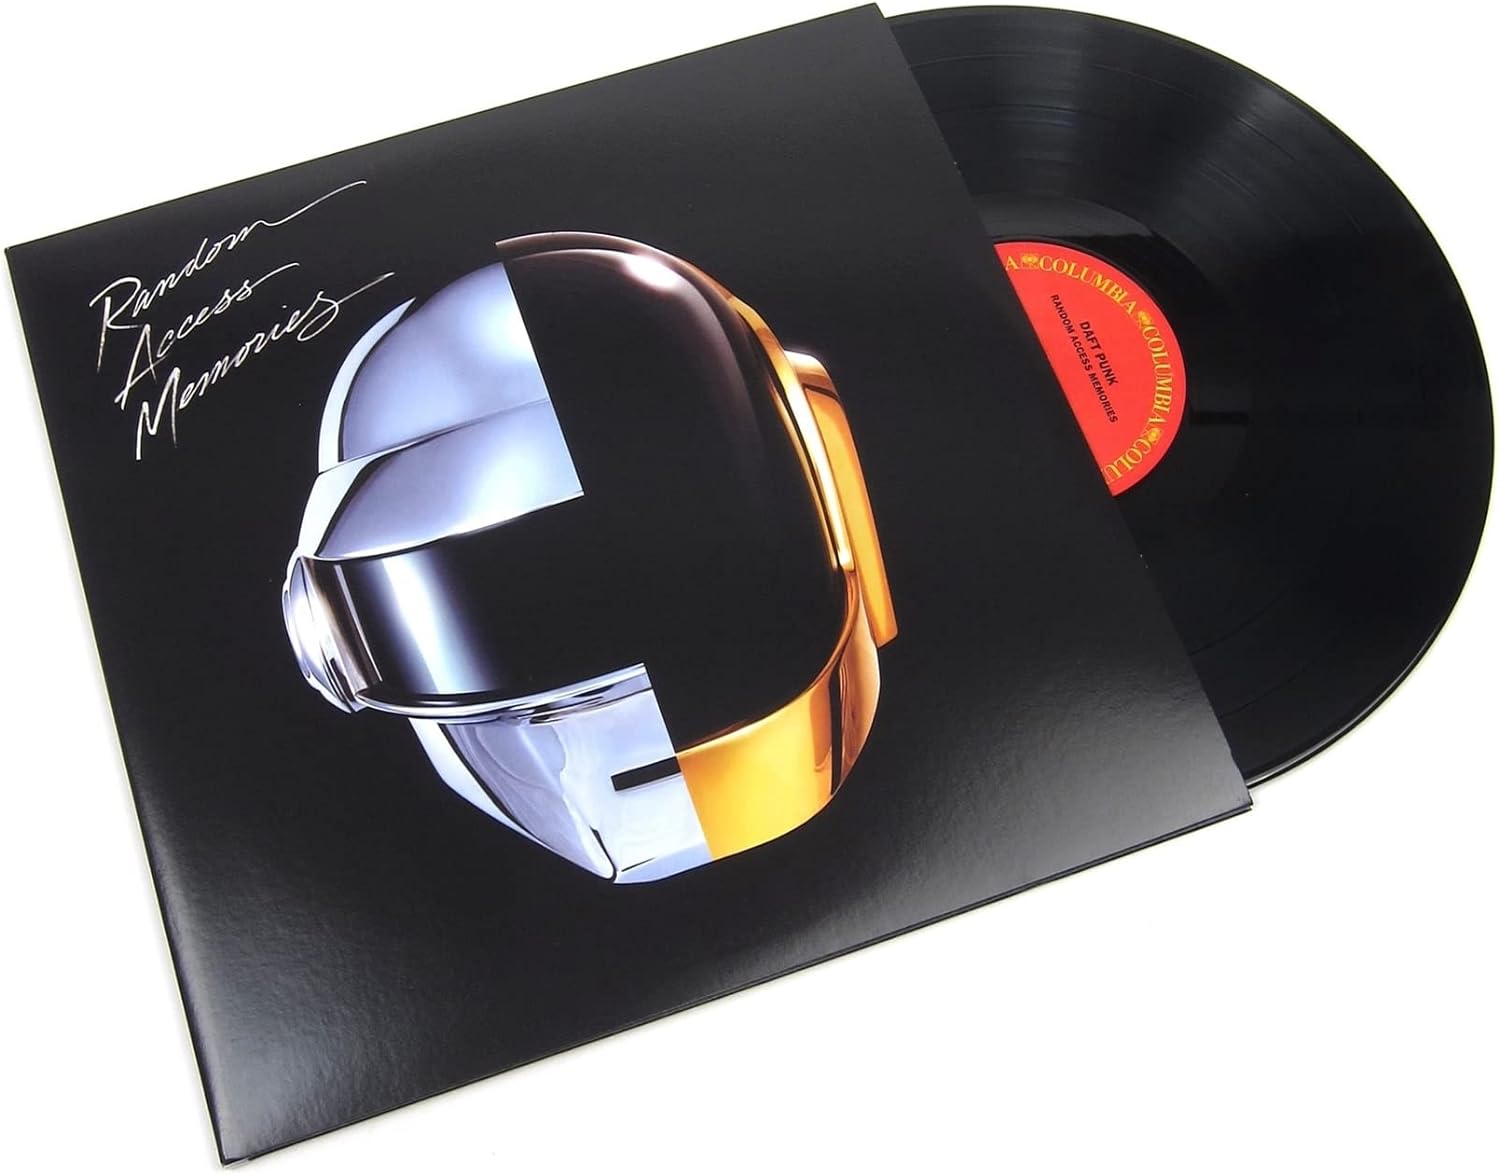 Daft Punk "Random Access Memories" Vinyl